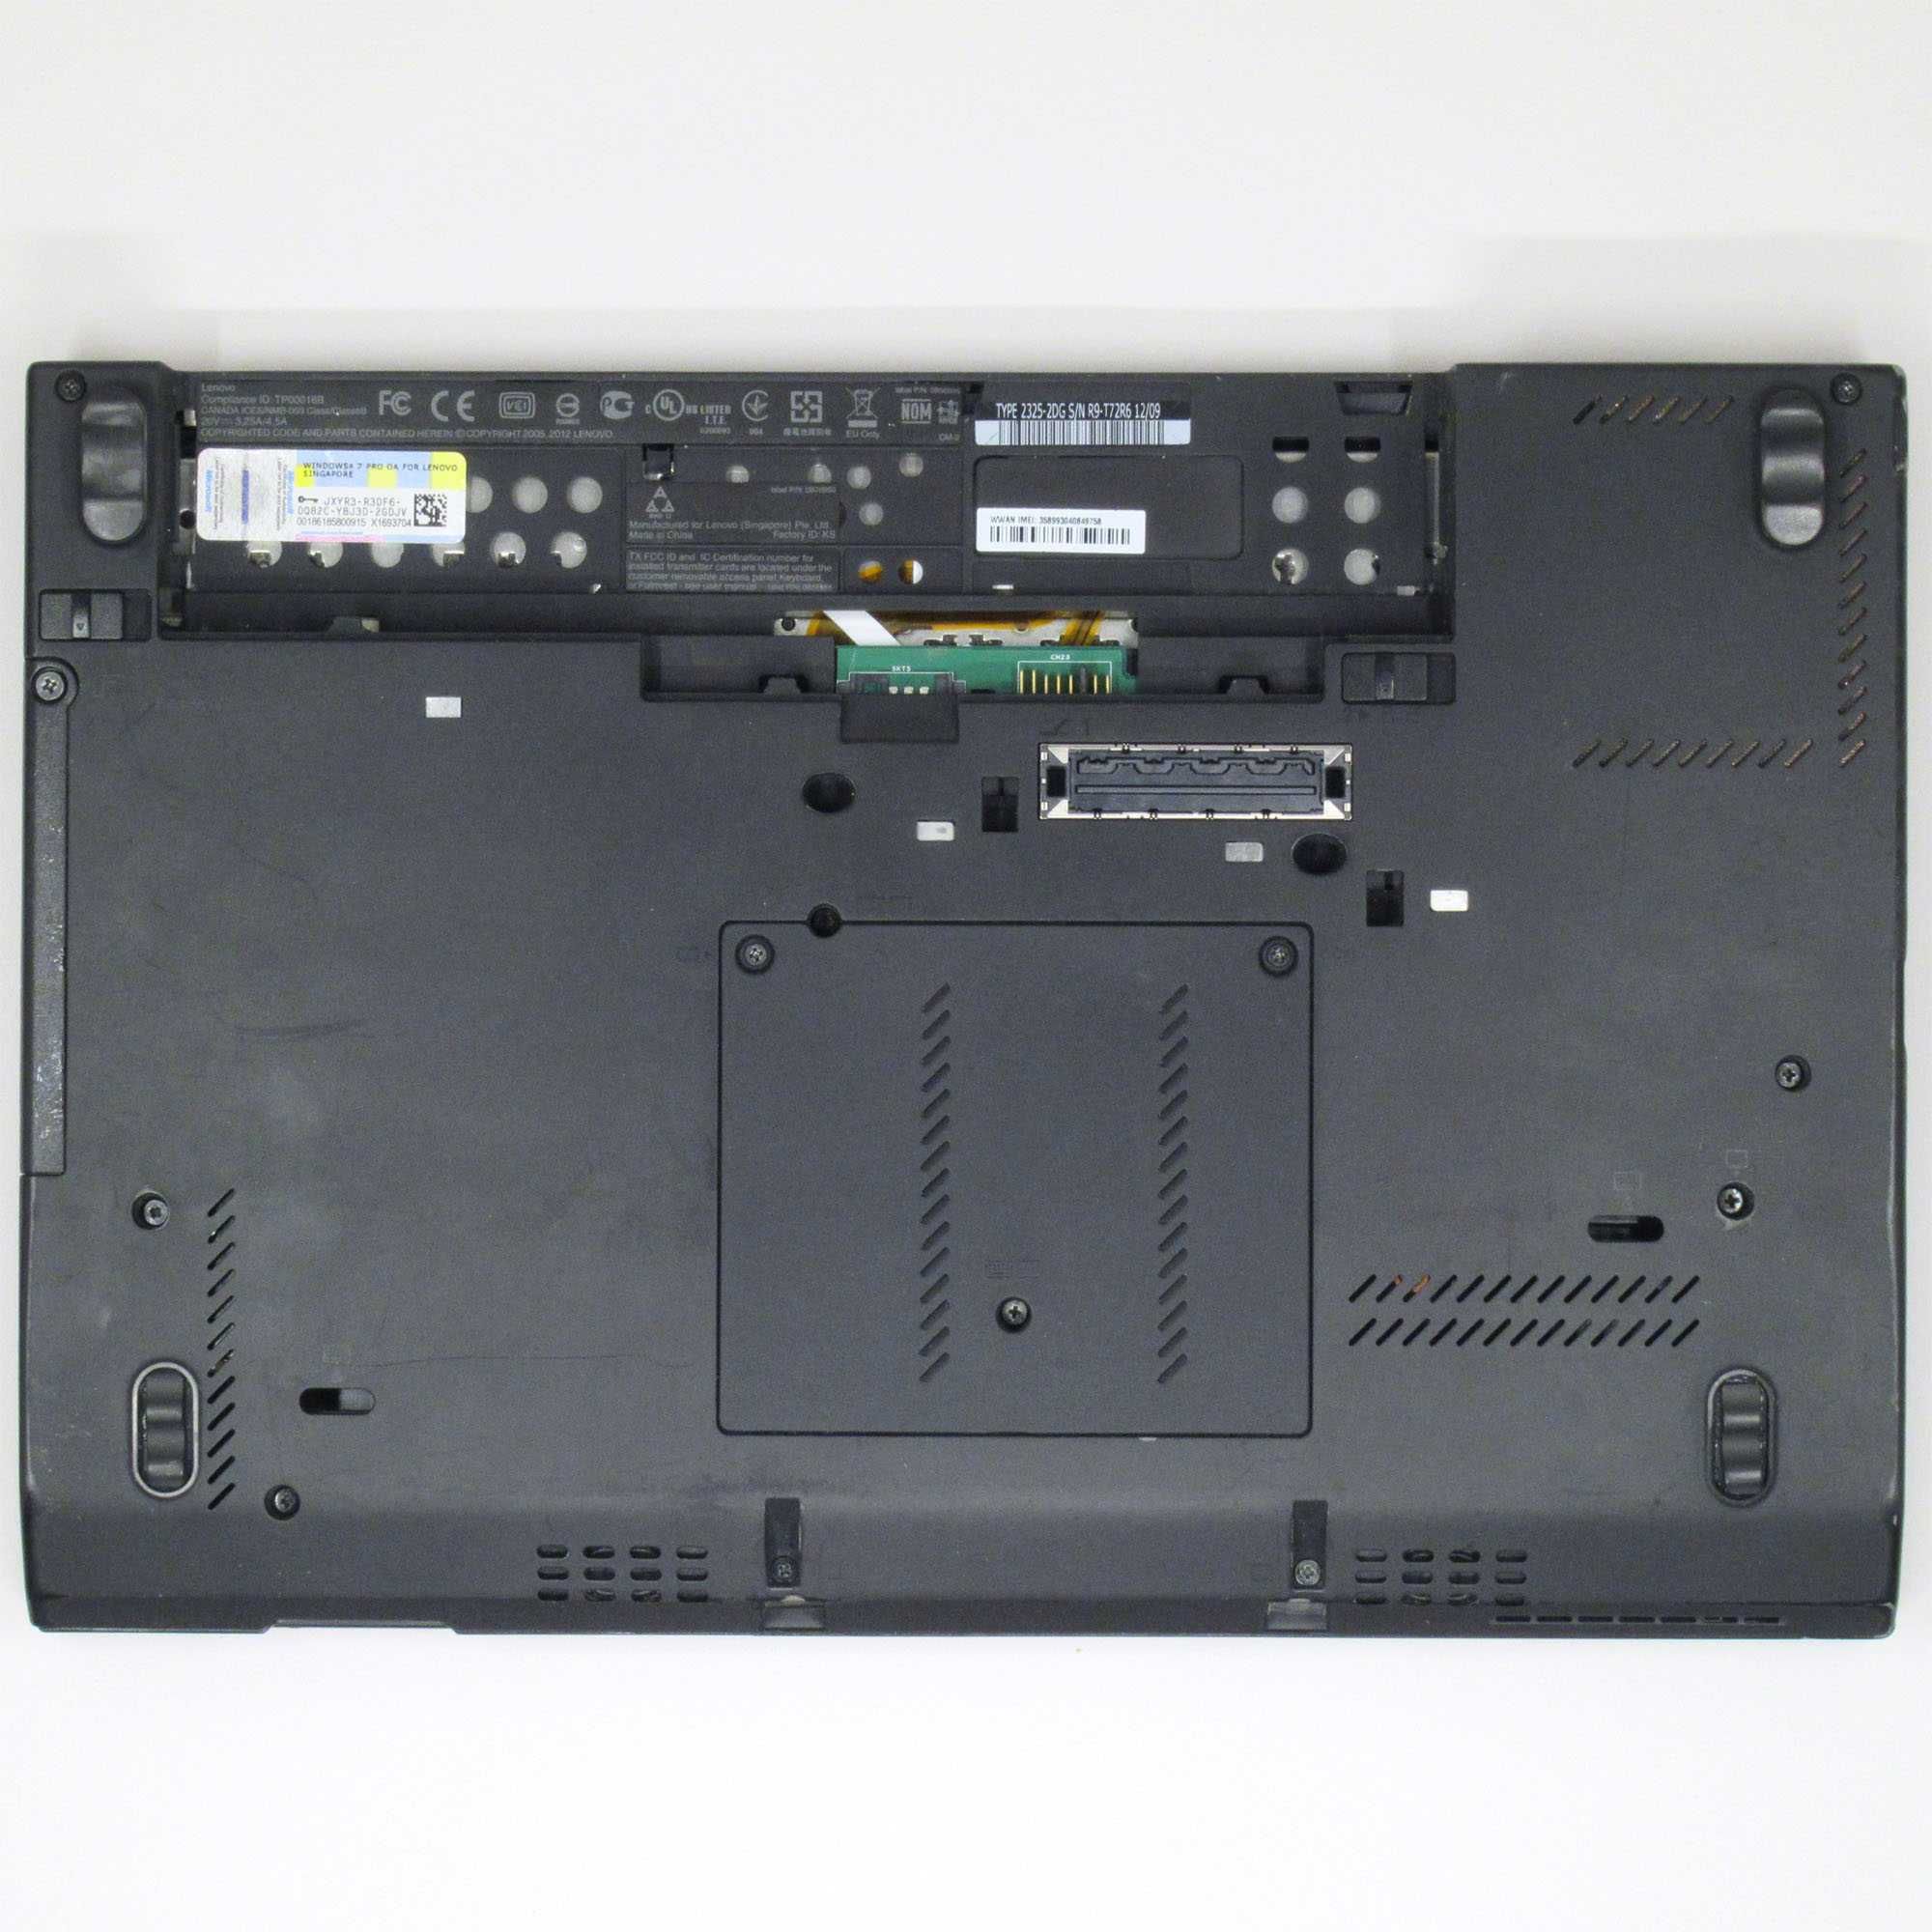 Lenovo x230 (i5-8GB-320GB),3G,wifi,bluetooth